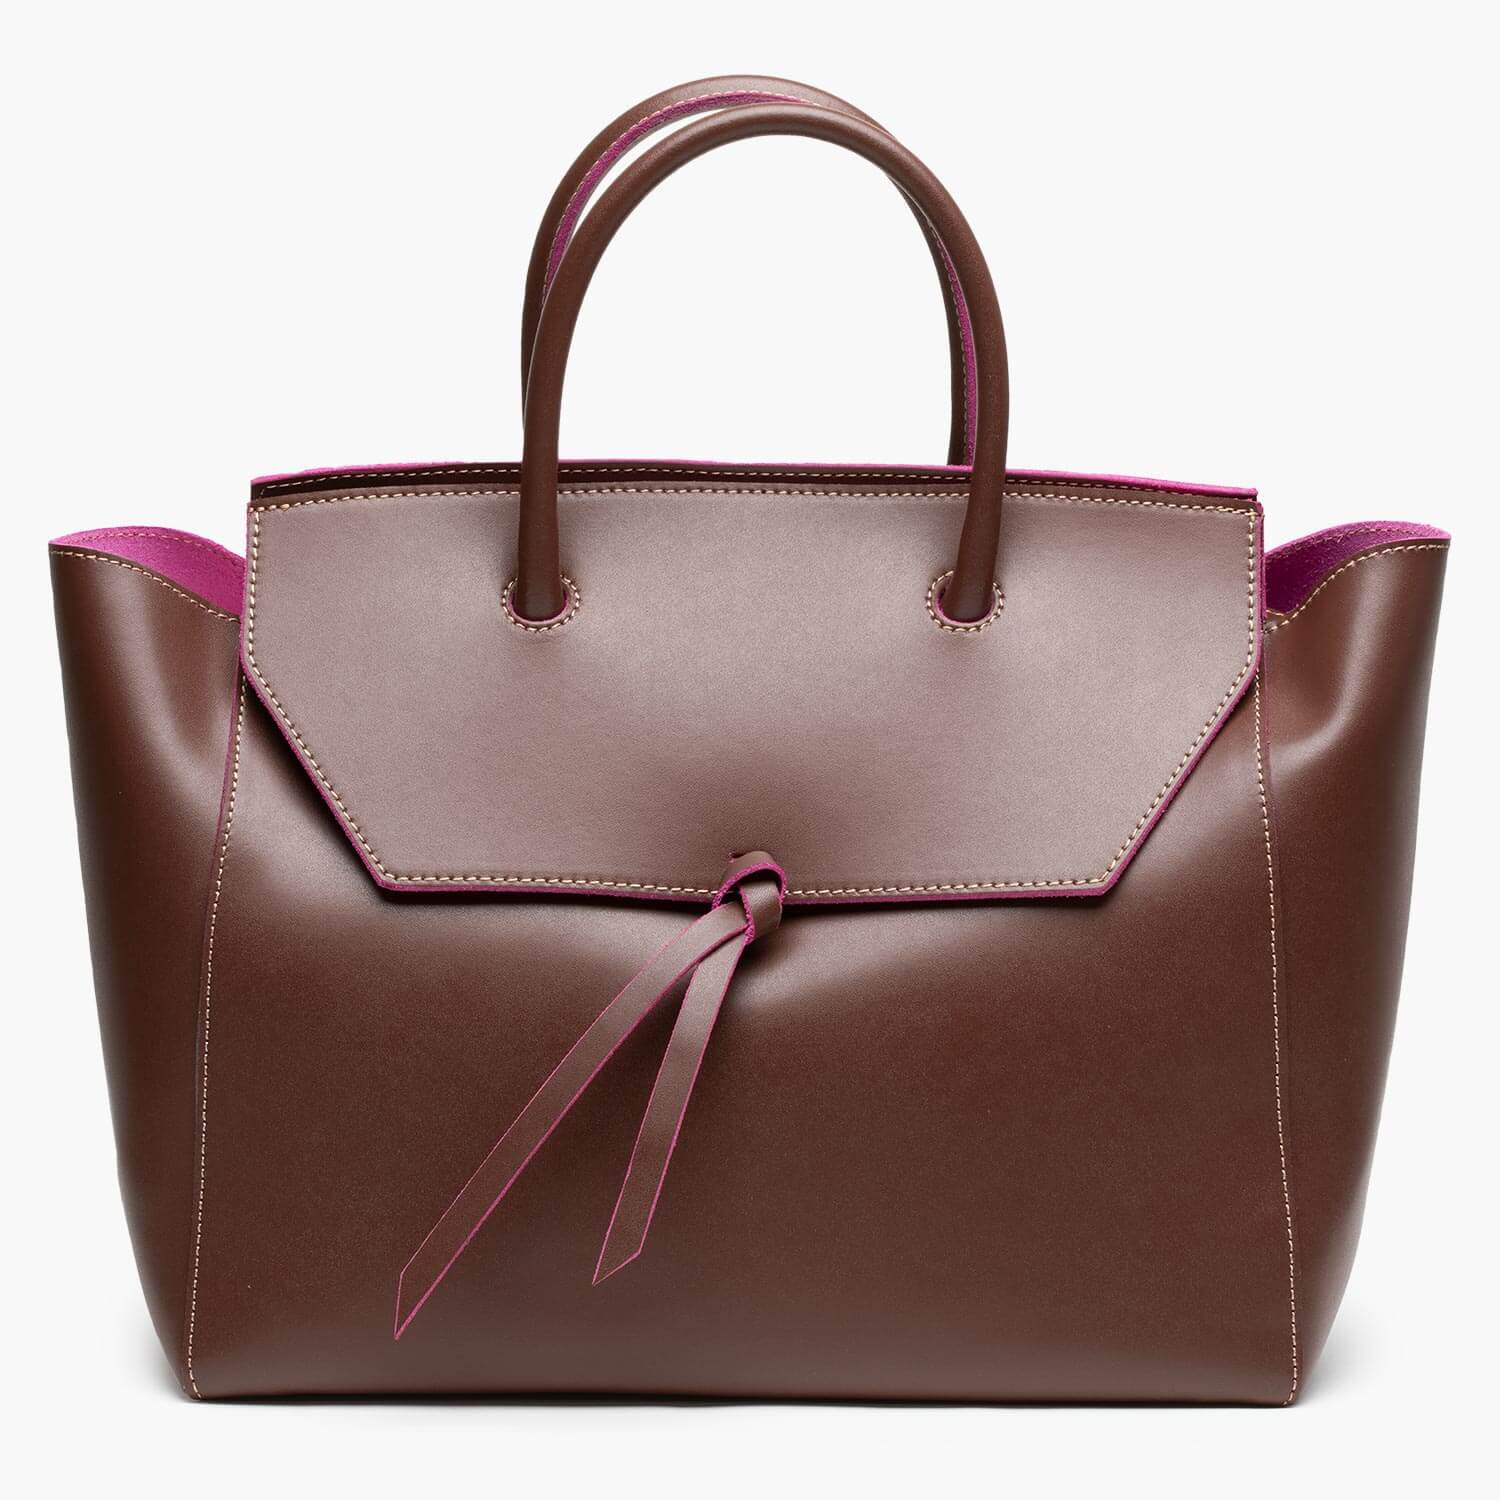 Liz claiborne pink purse - Gem